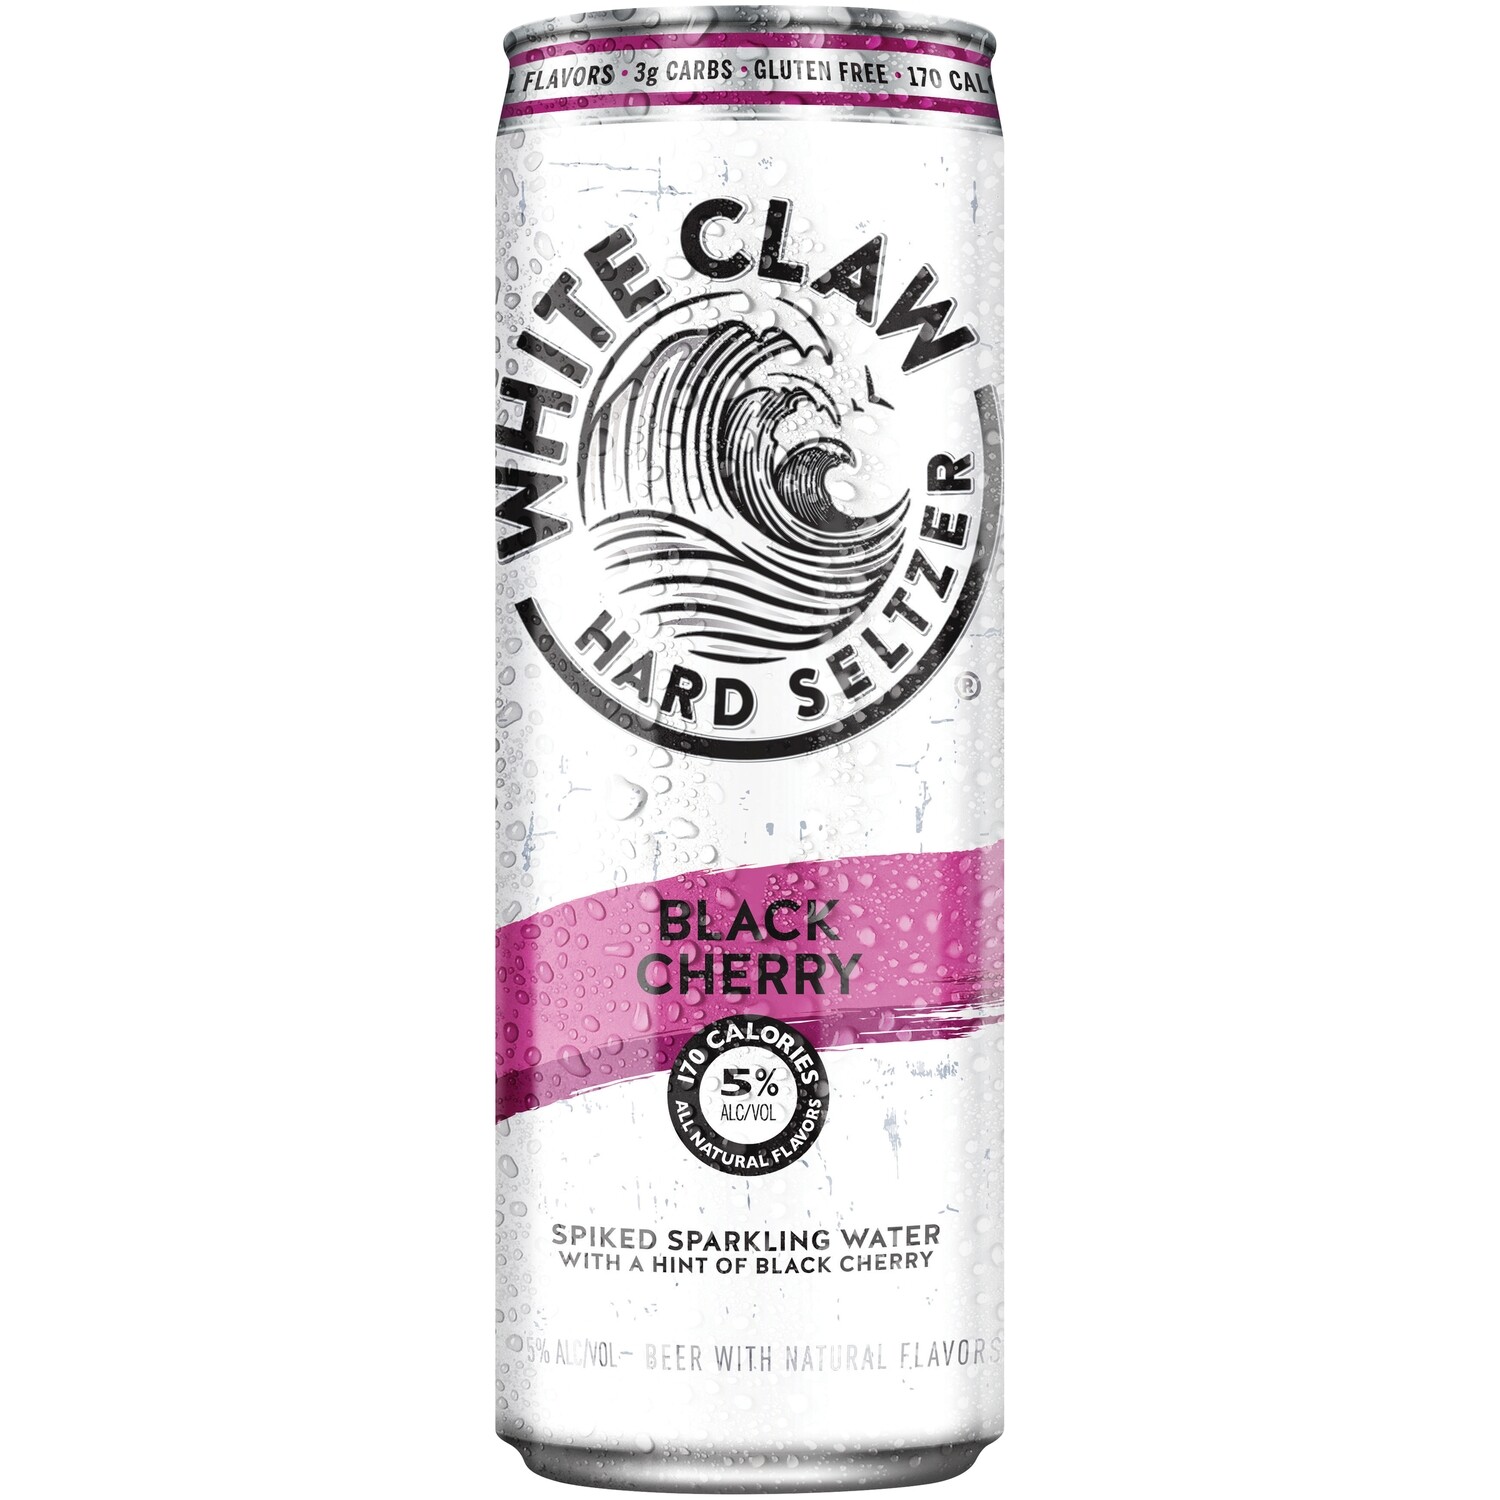 White Claw Black Cherry 19oz can